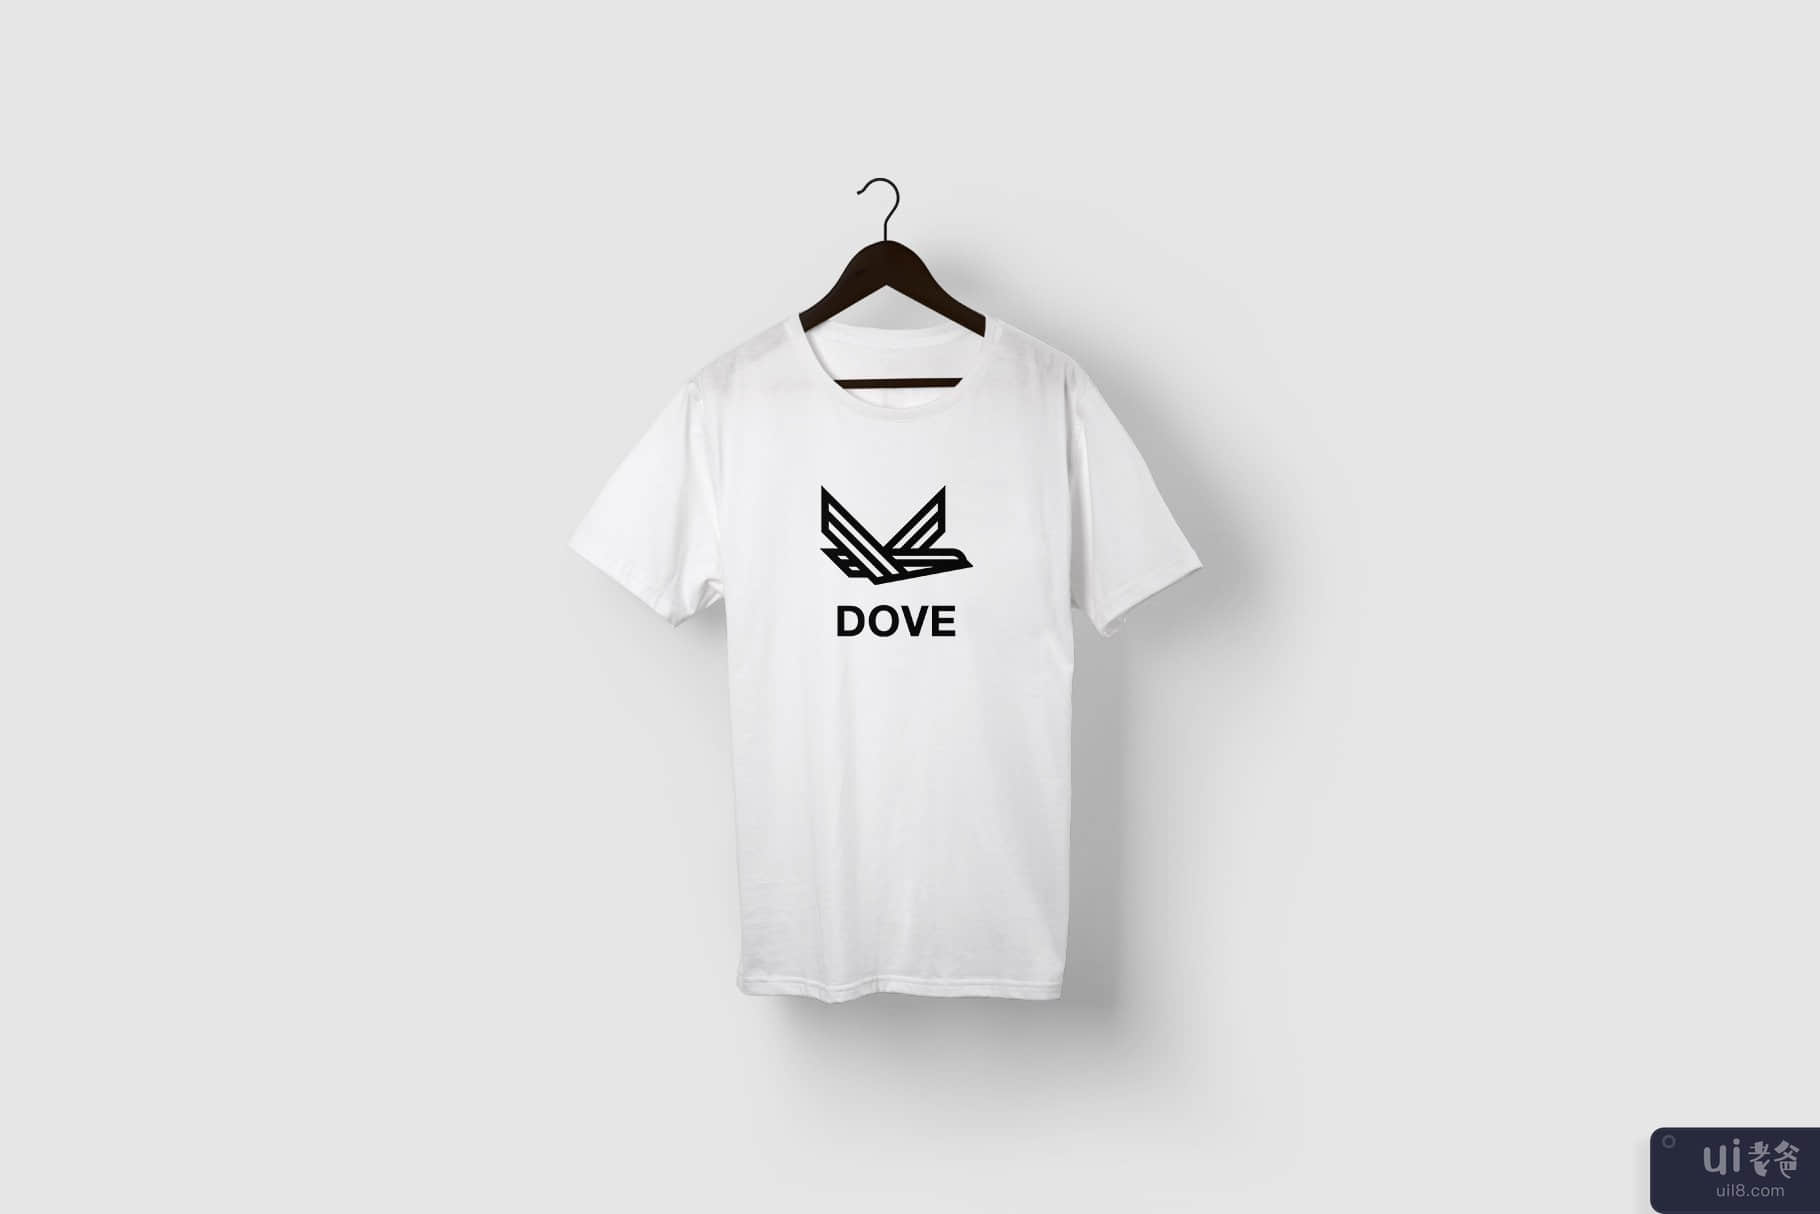 鸽子(Dove)插图